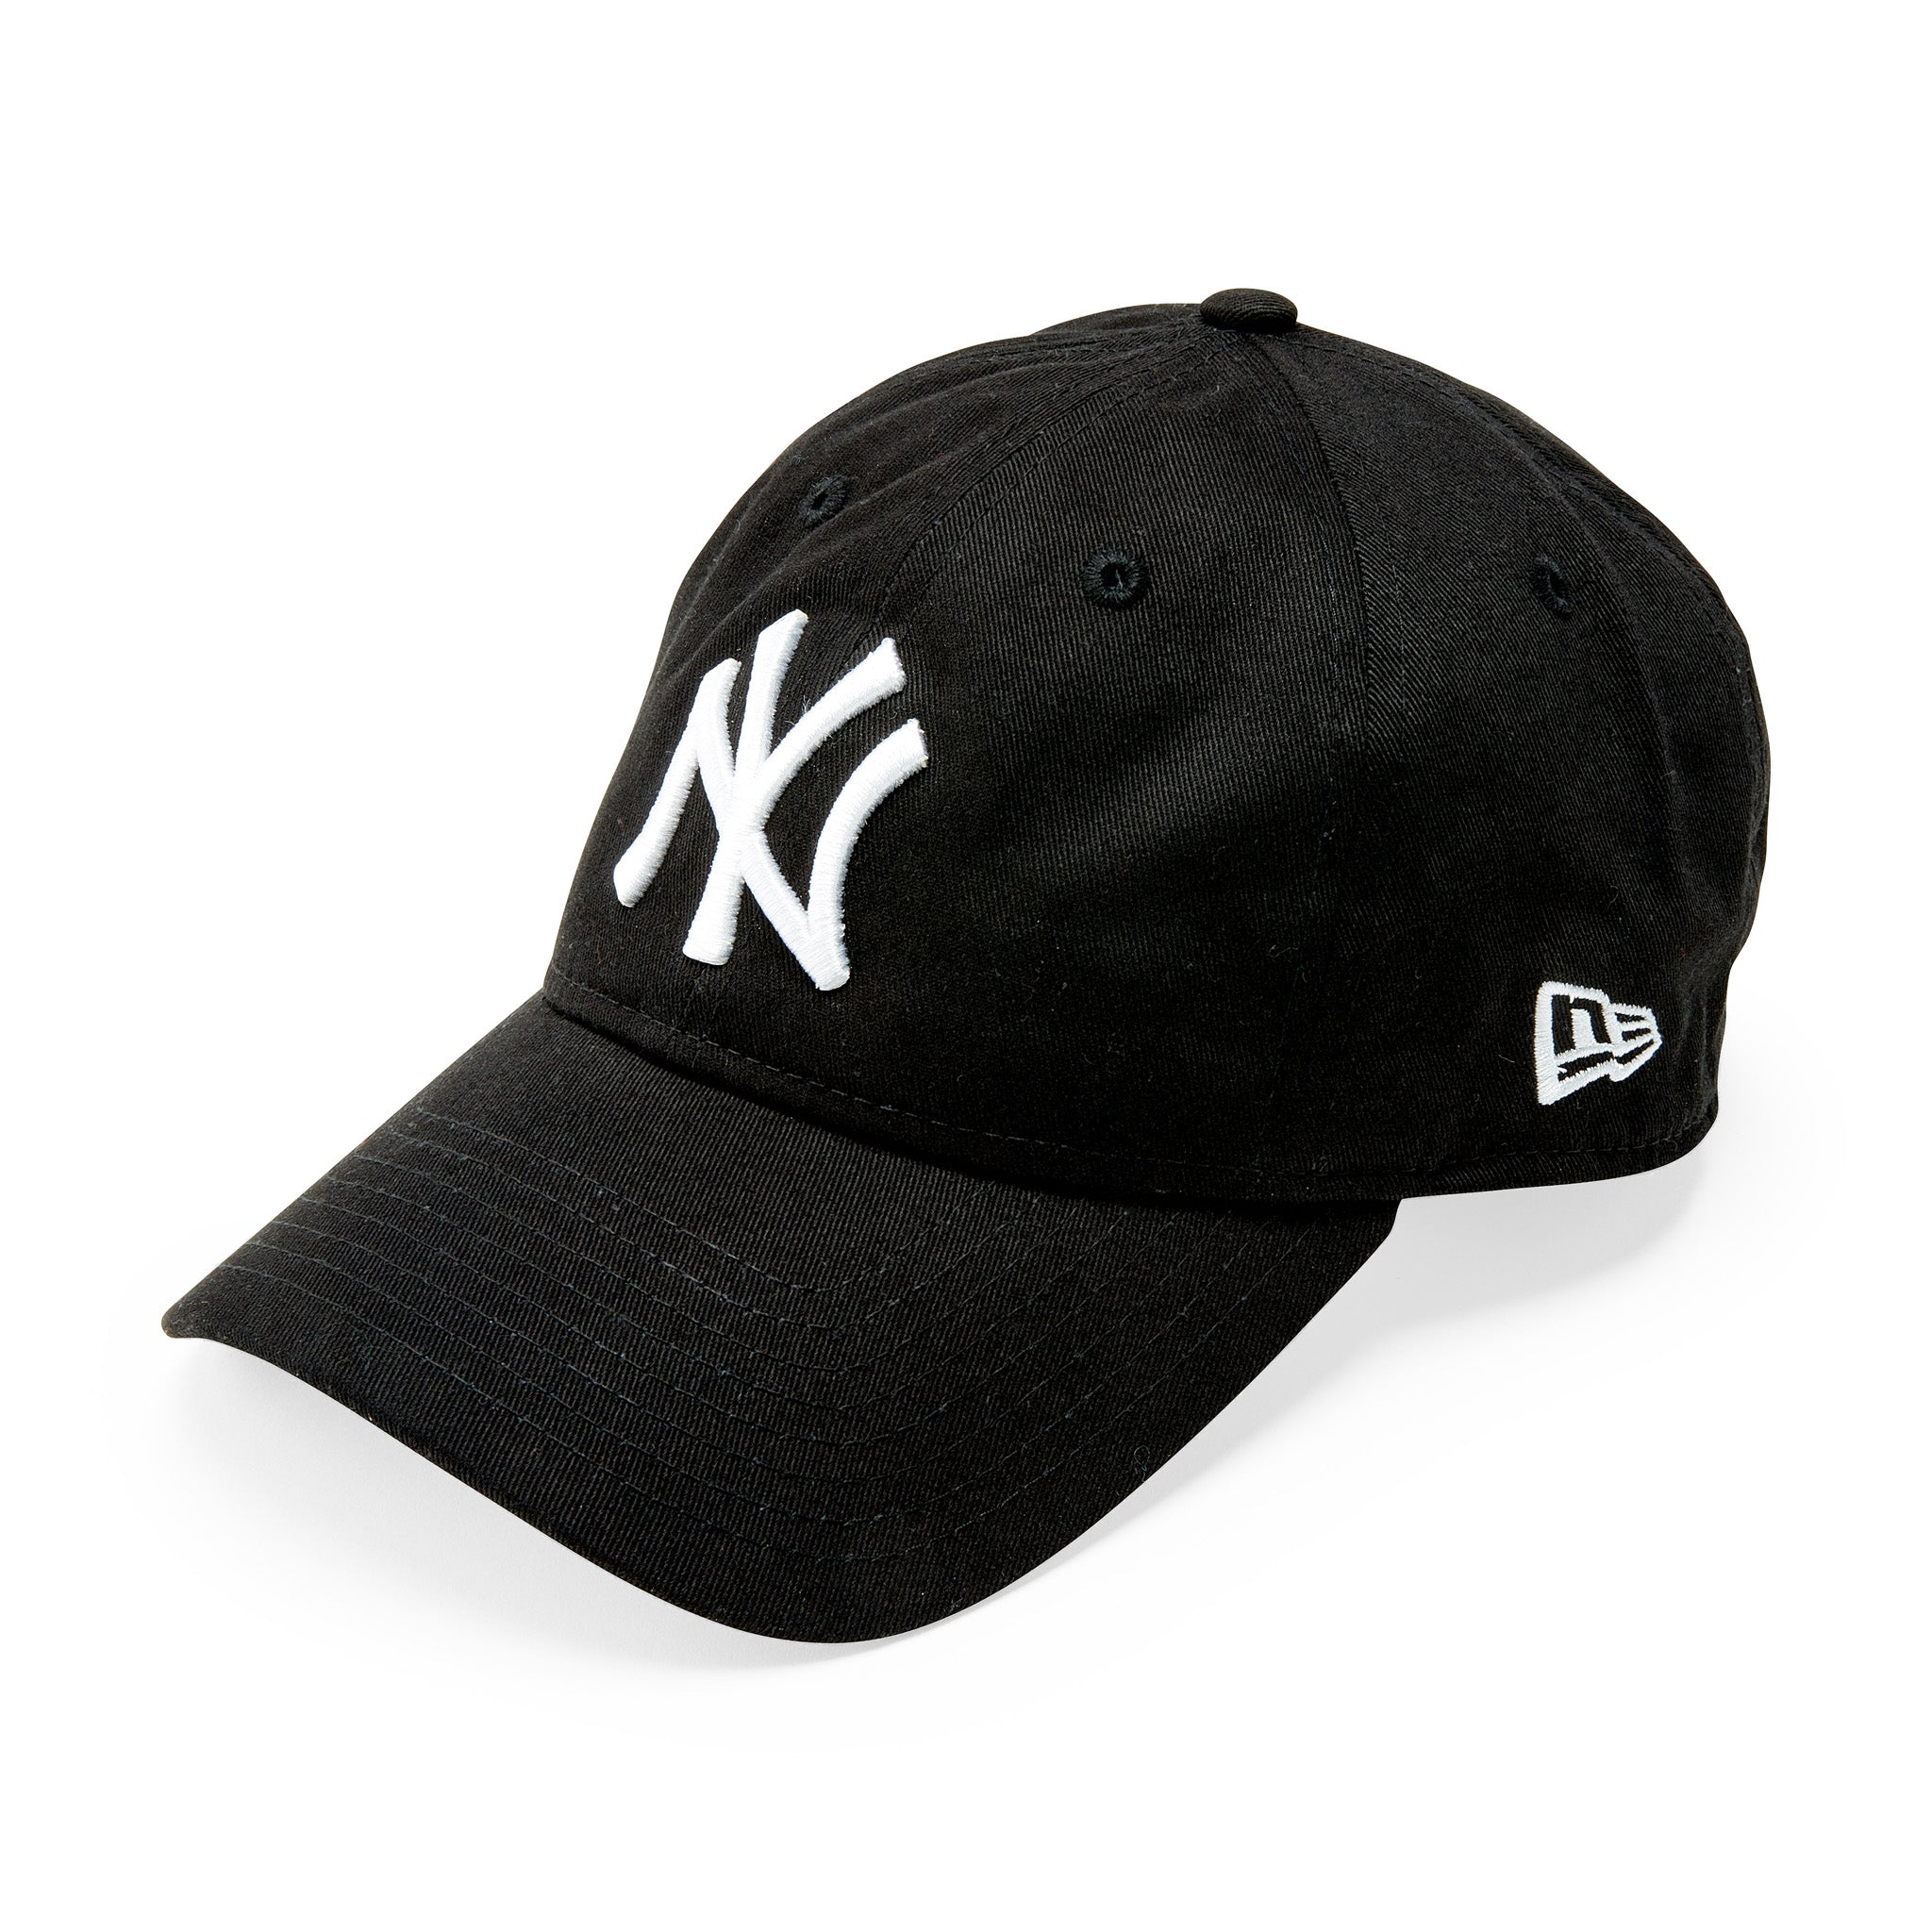 MoMA NY Yankees Adjustable Baseball Cap - Black